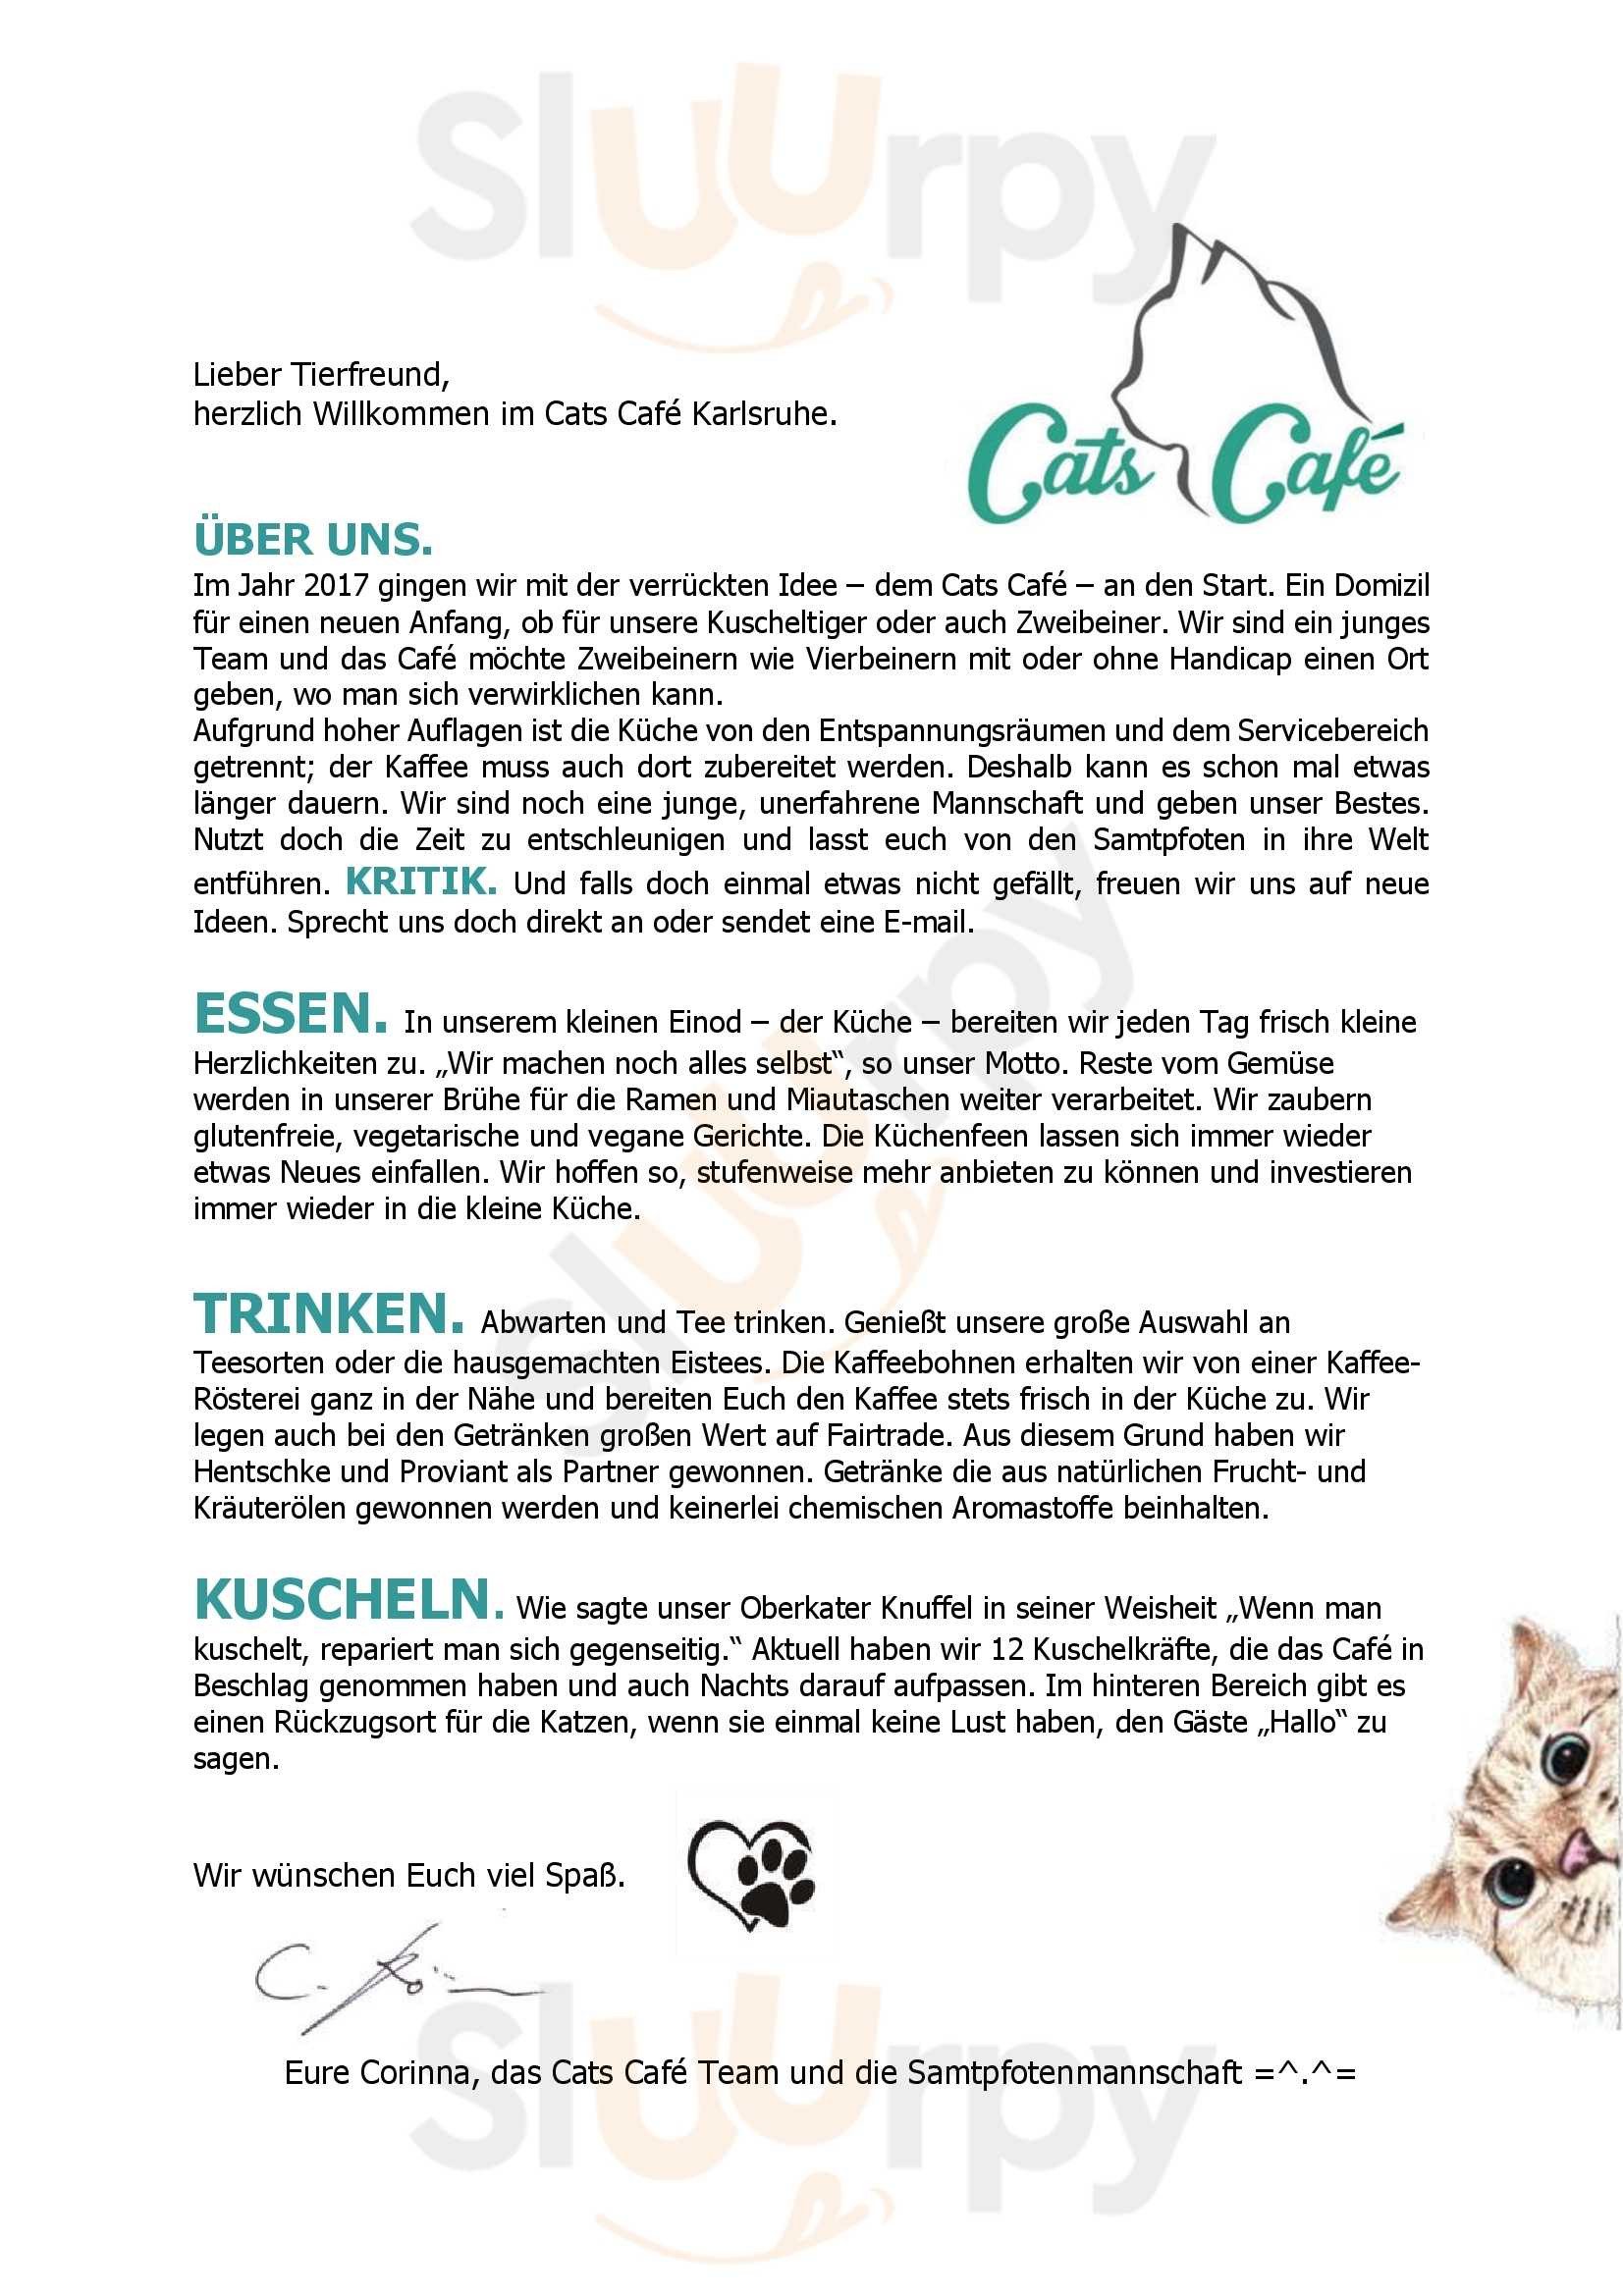 Cats Café Karlsruhe Karlsruhe Menu - 1